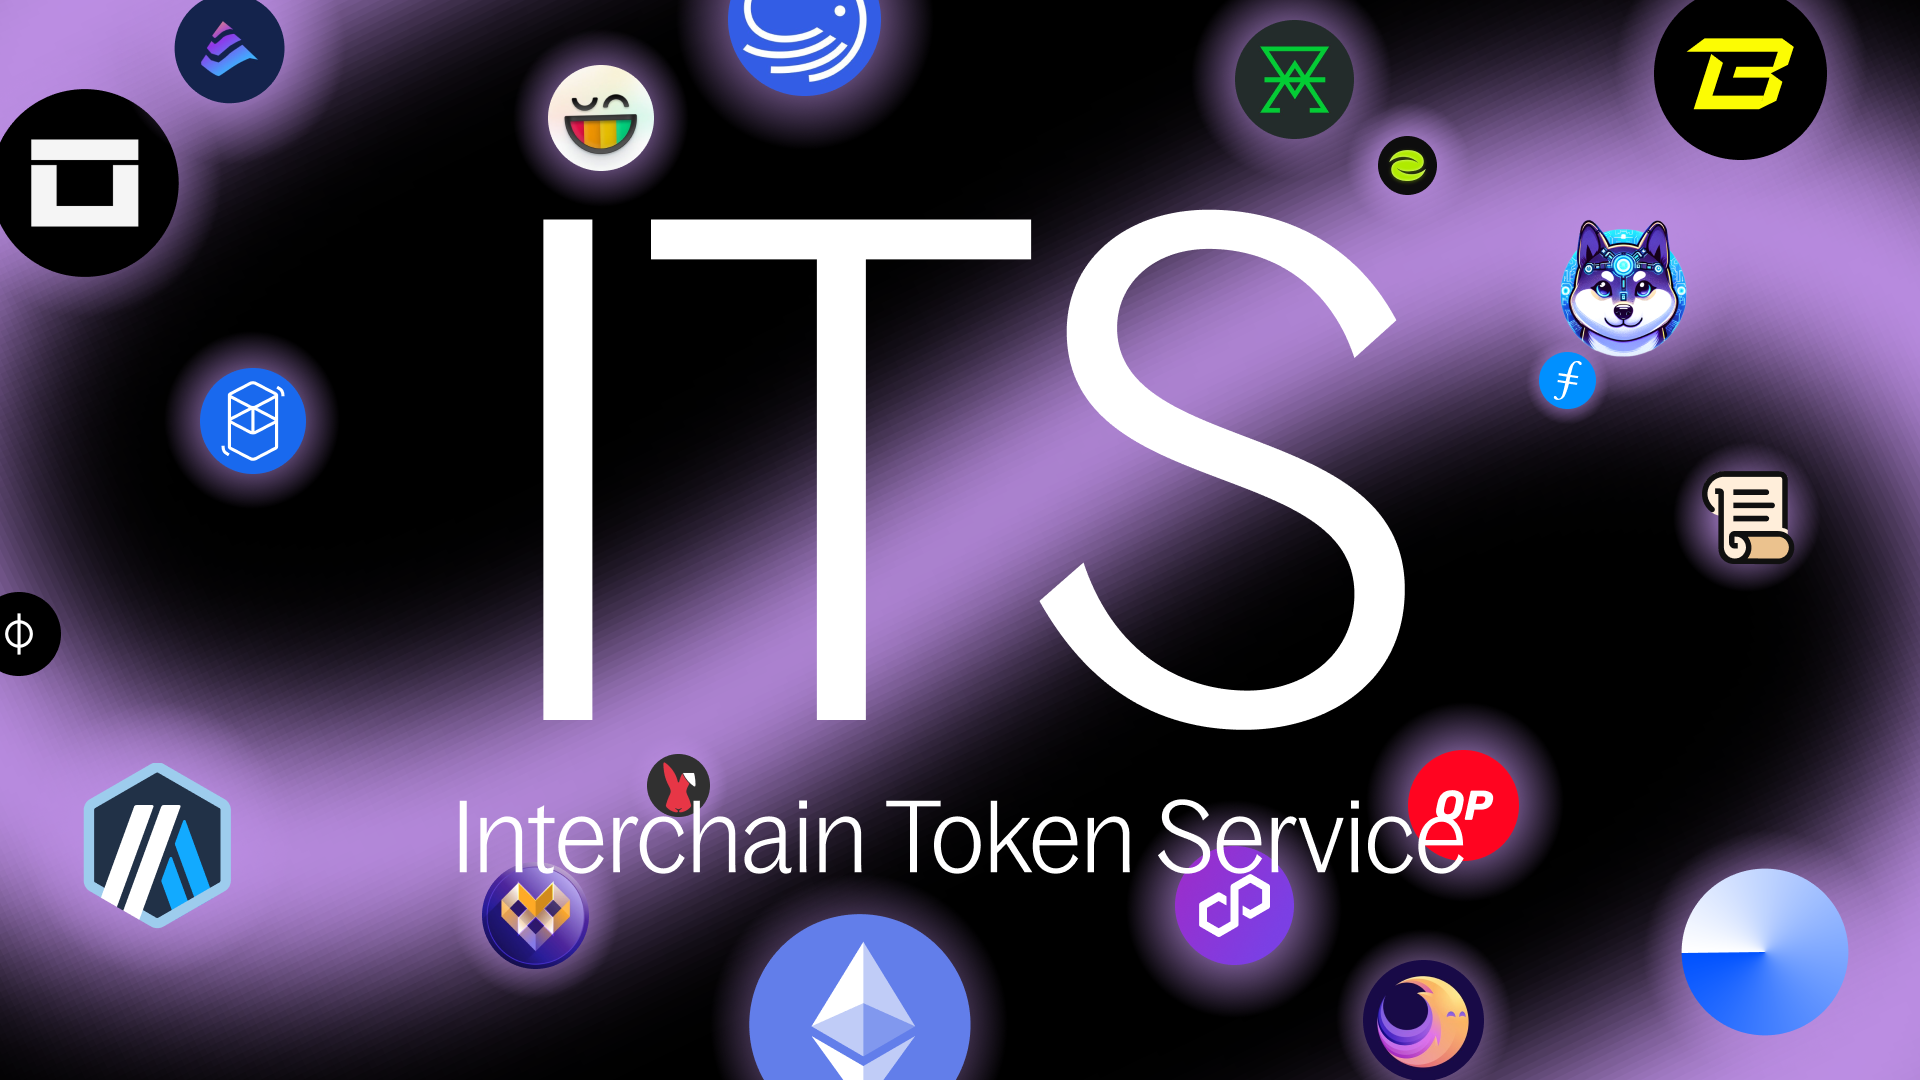 What is ITS? Interchain Token Service